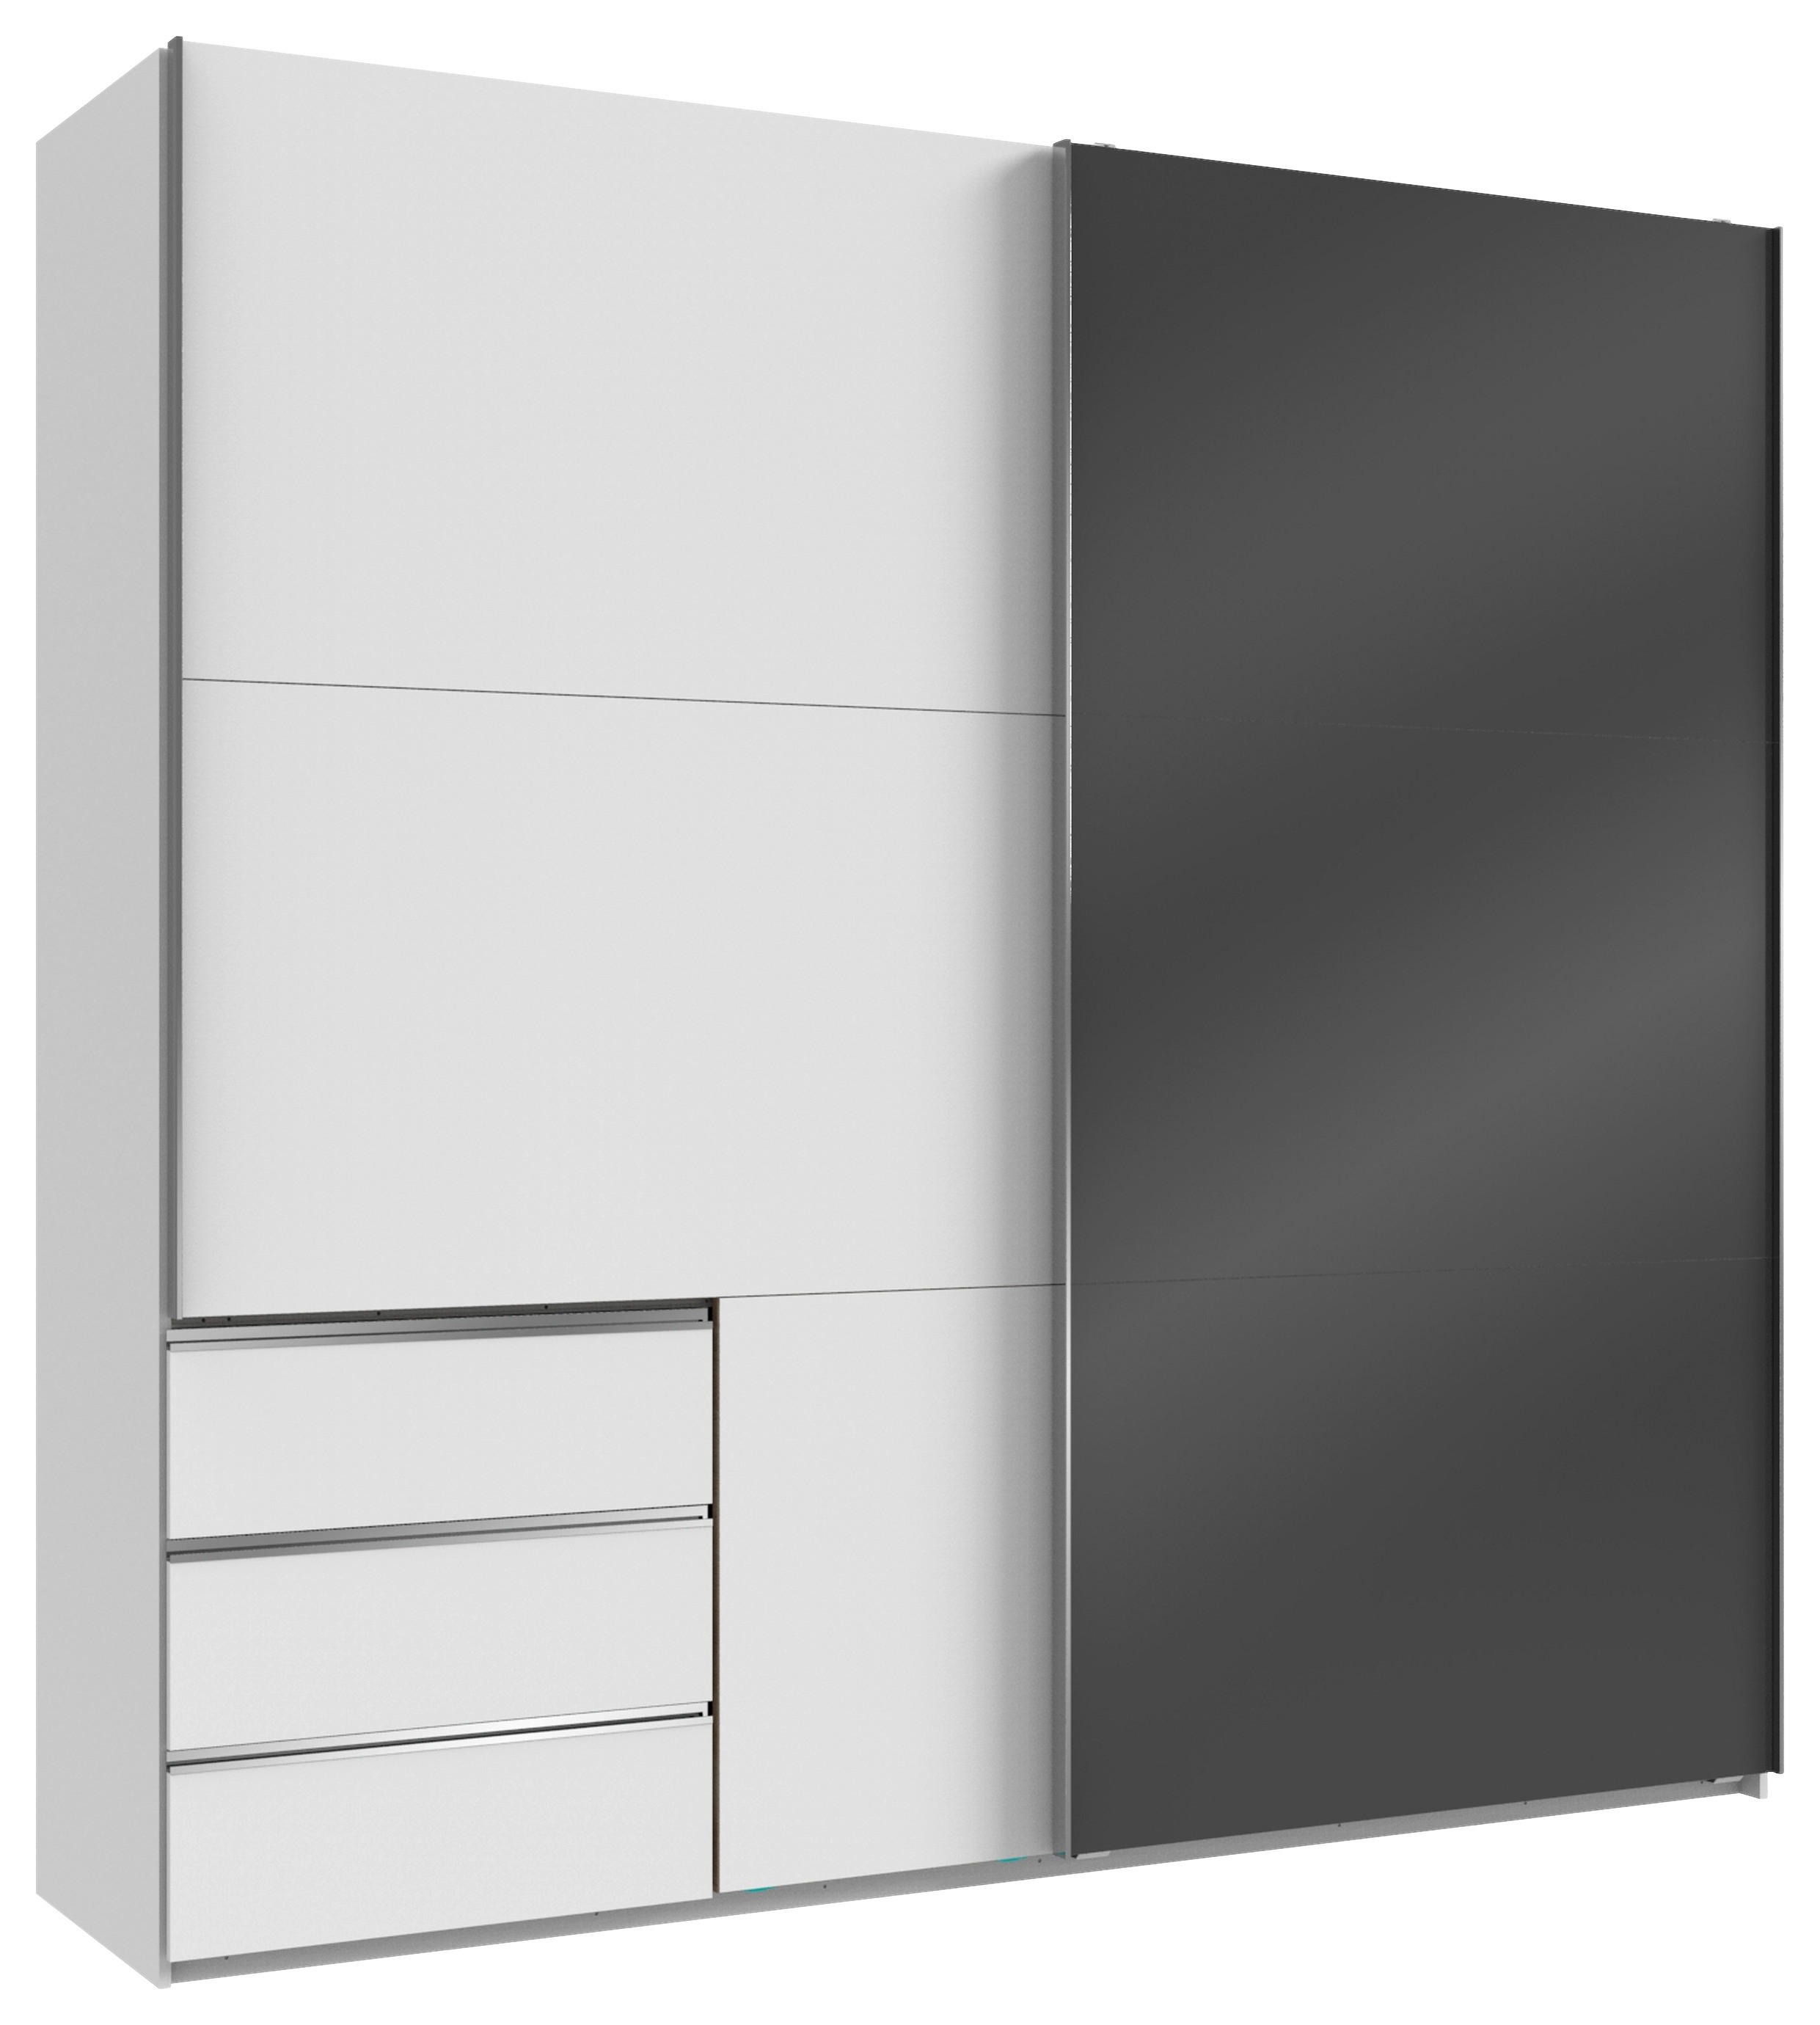 SCHWEBETÜRENSCHRANK 2-türig Grau, Weiß  - Chromfarben/Weiß, MODERN (250/236/65cm) - MID.YOU